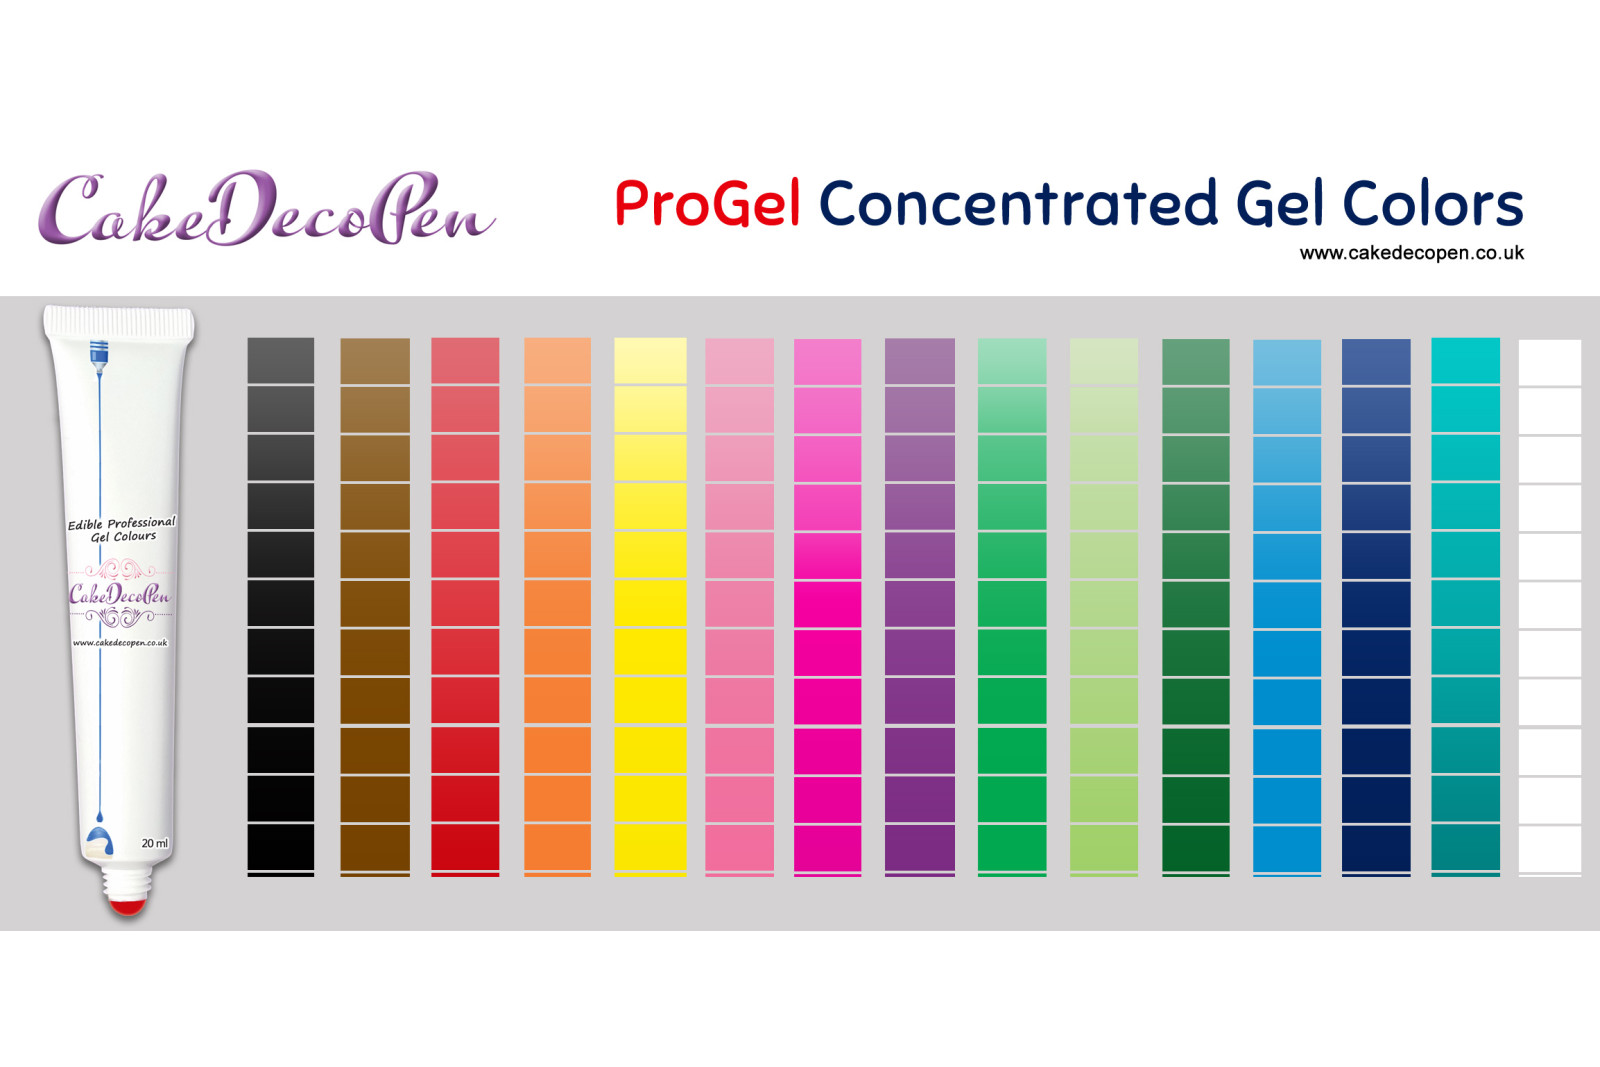 Royal Blue | Gel Food Colors | Concentrated ProGel | Cake Decorating | 30 ML